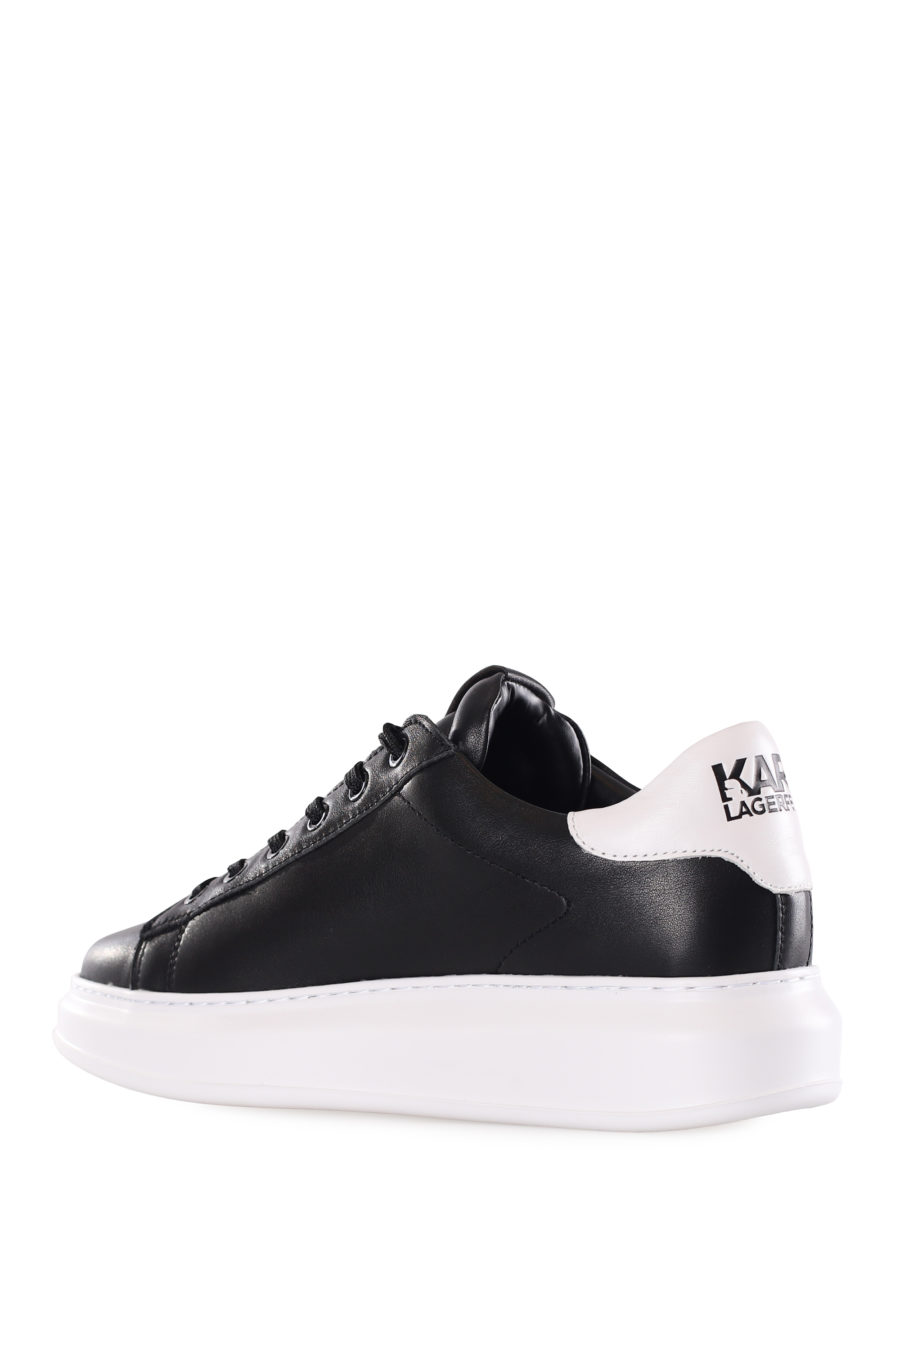 Zapatillas negras con logo "karl" en goma - IMG 9555